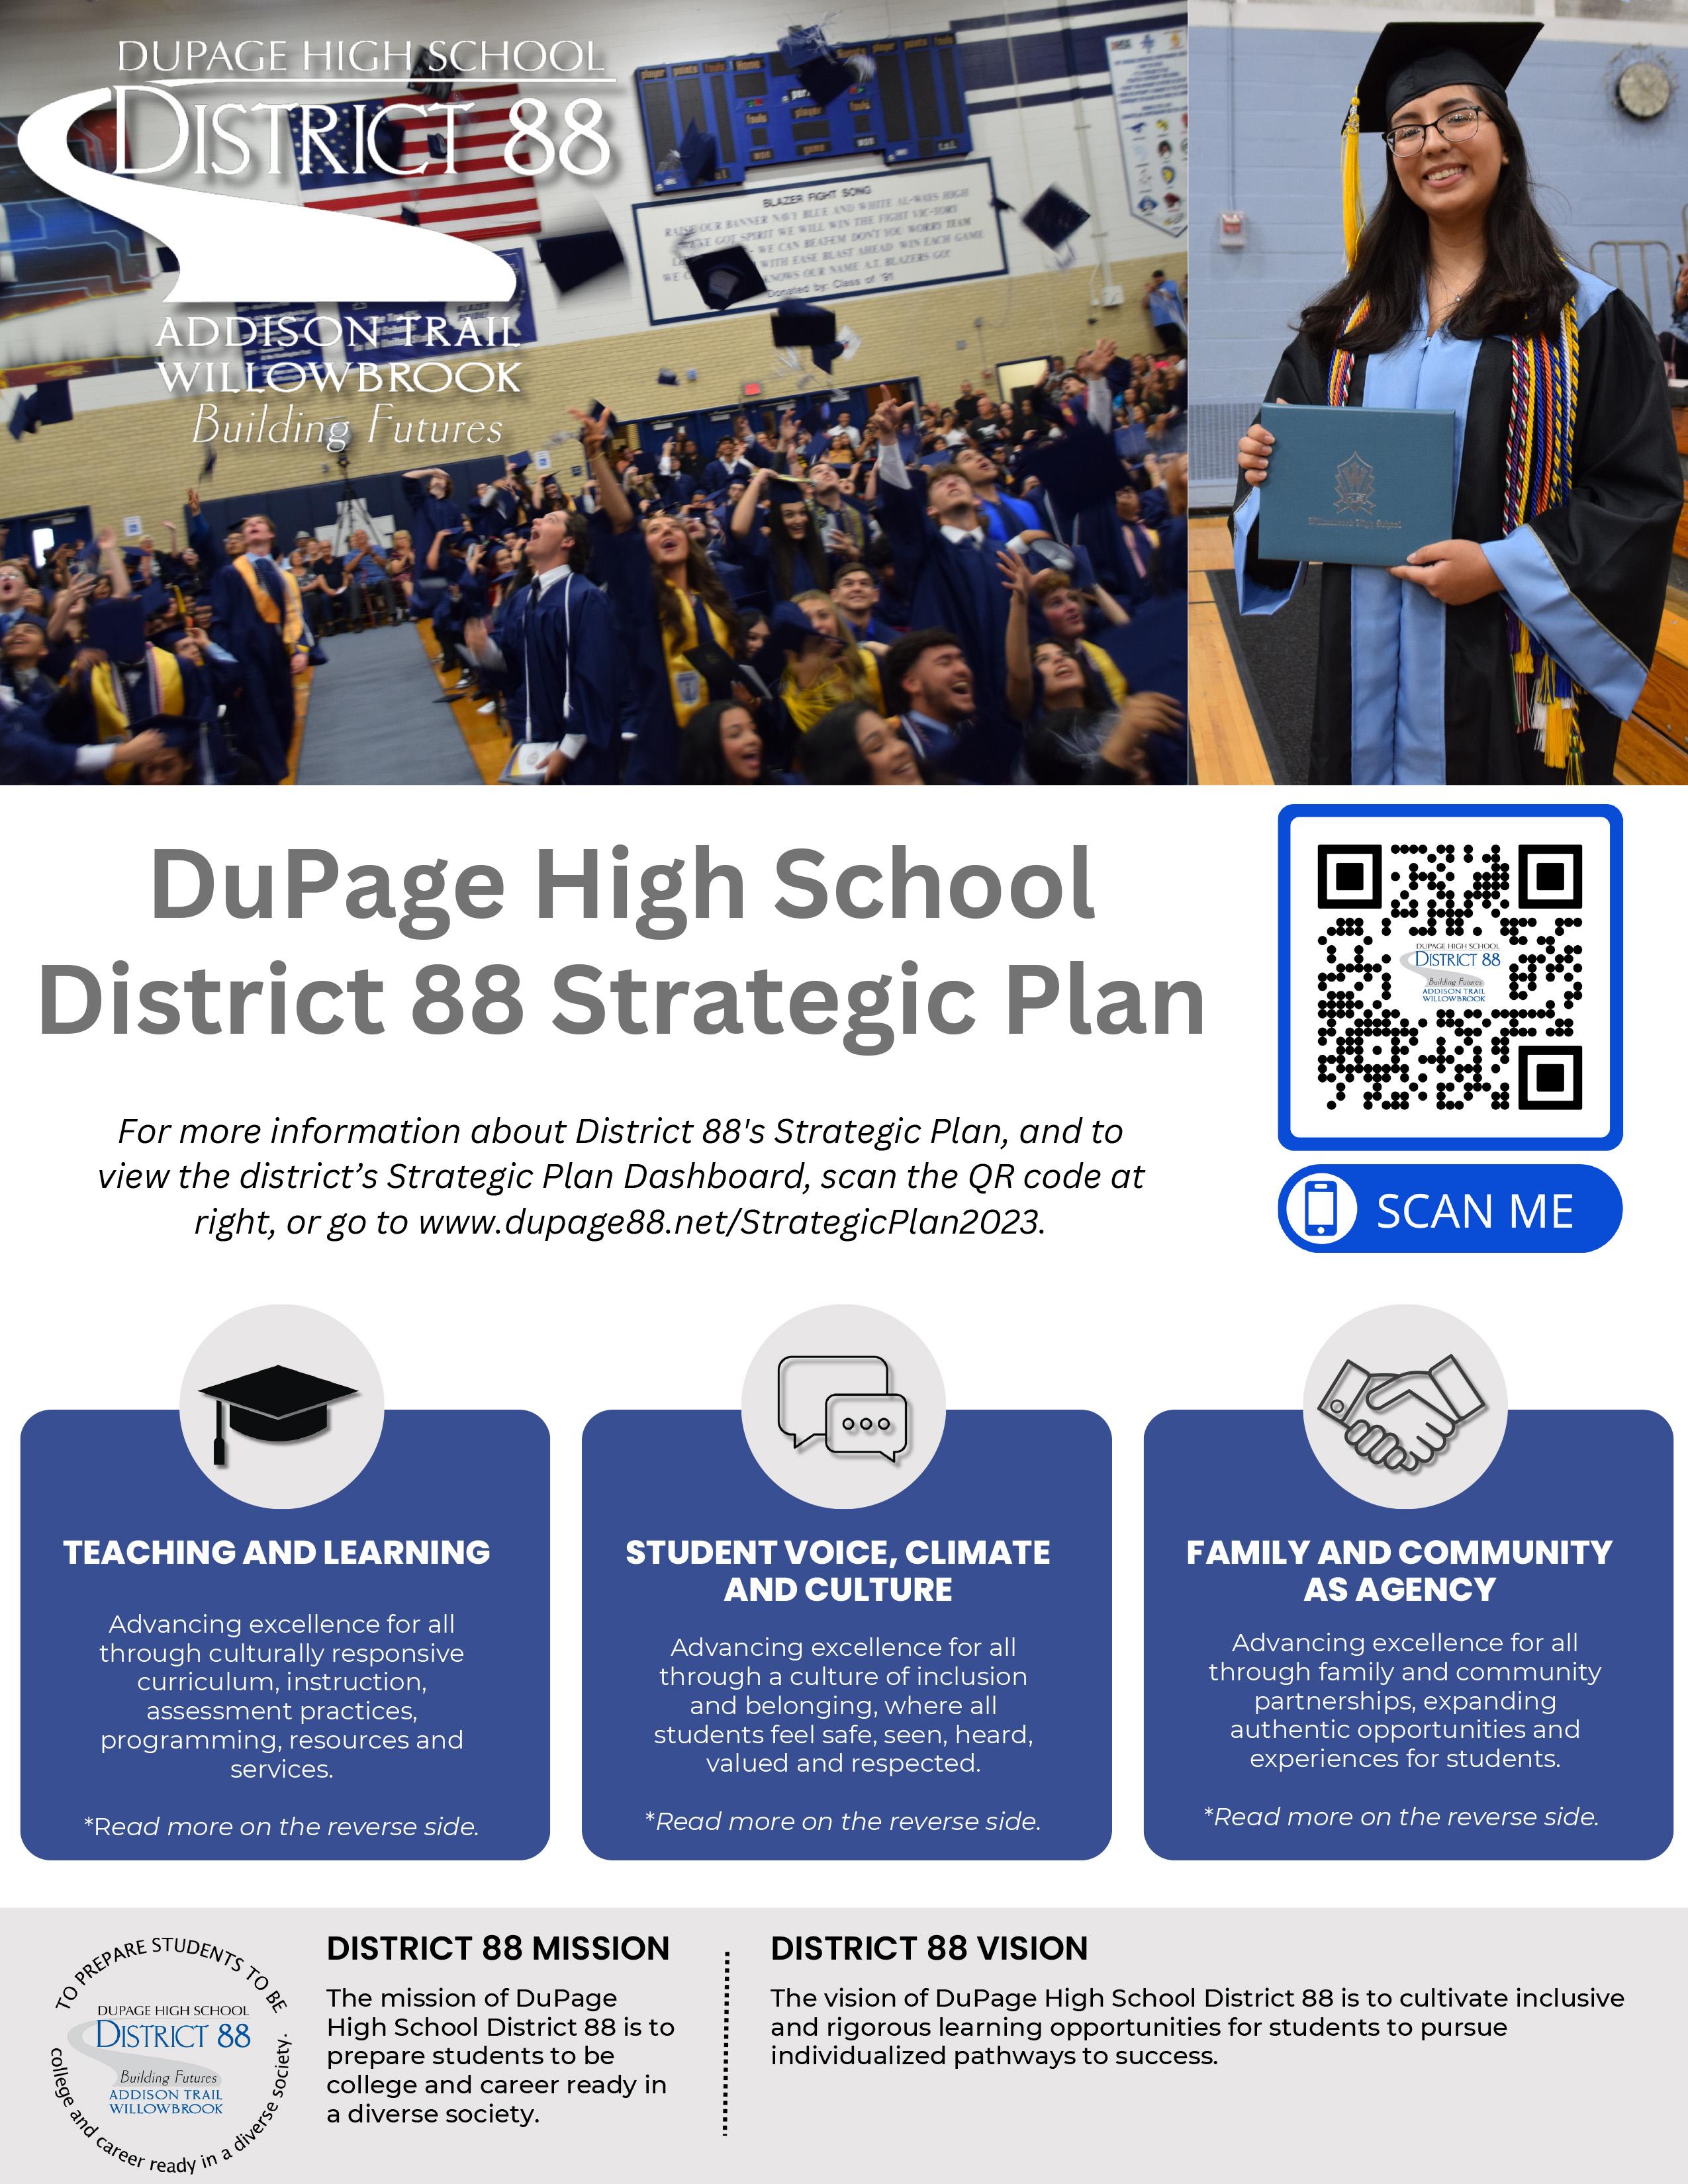 District 88 adopts updated strategic plan